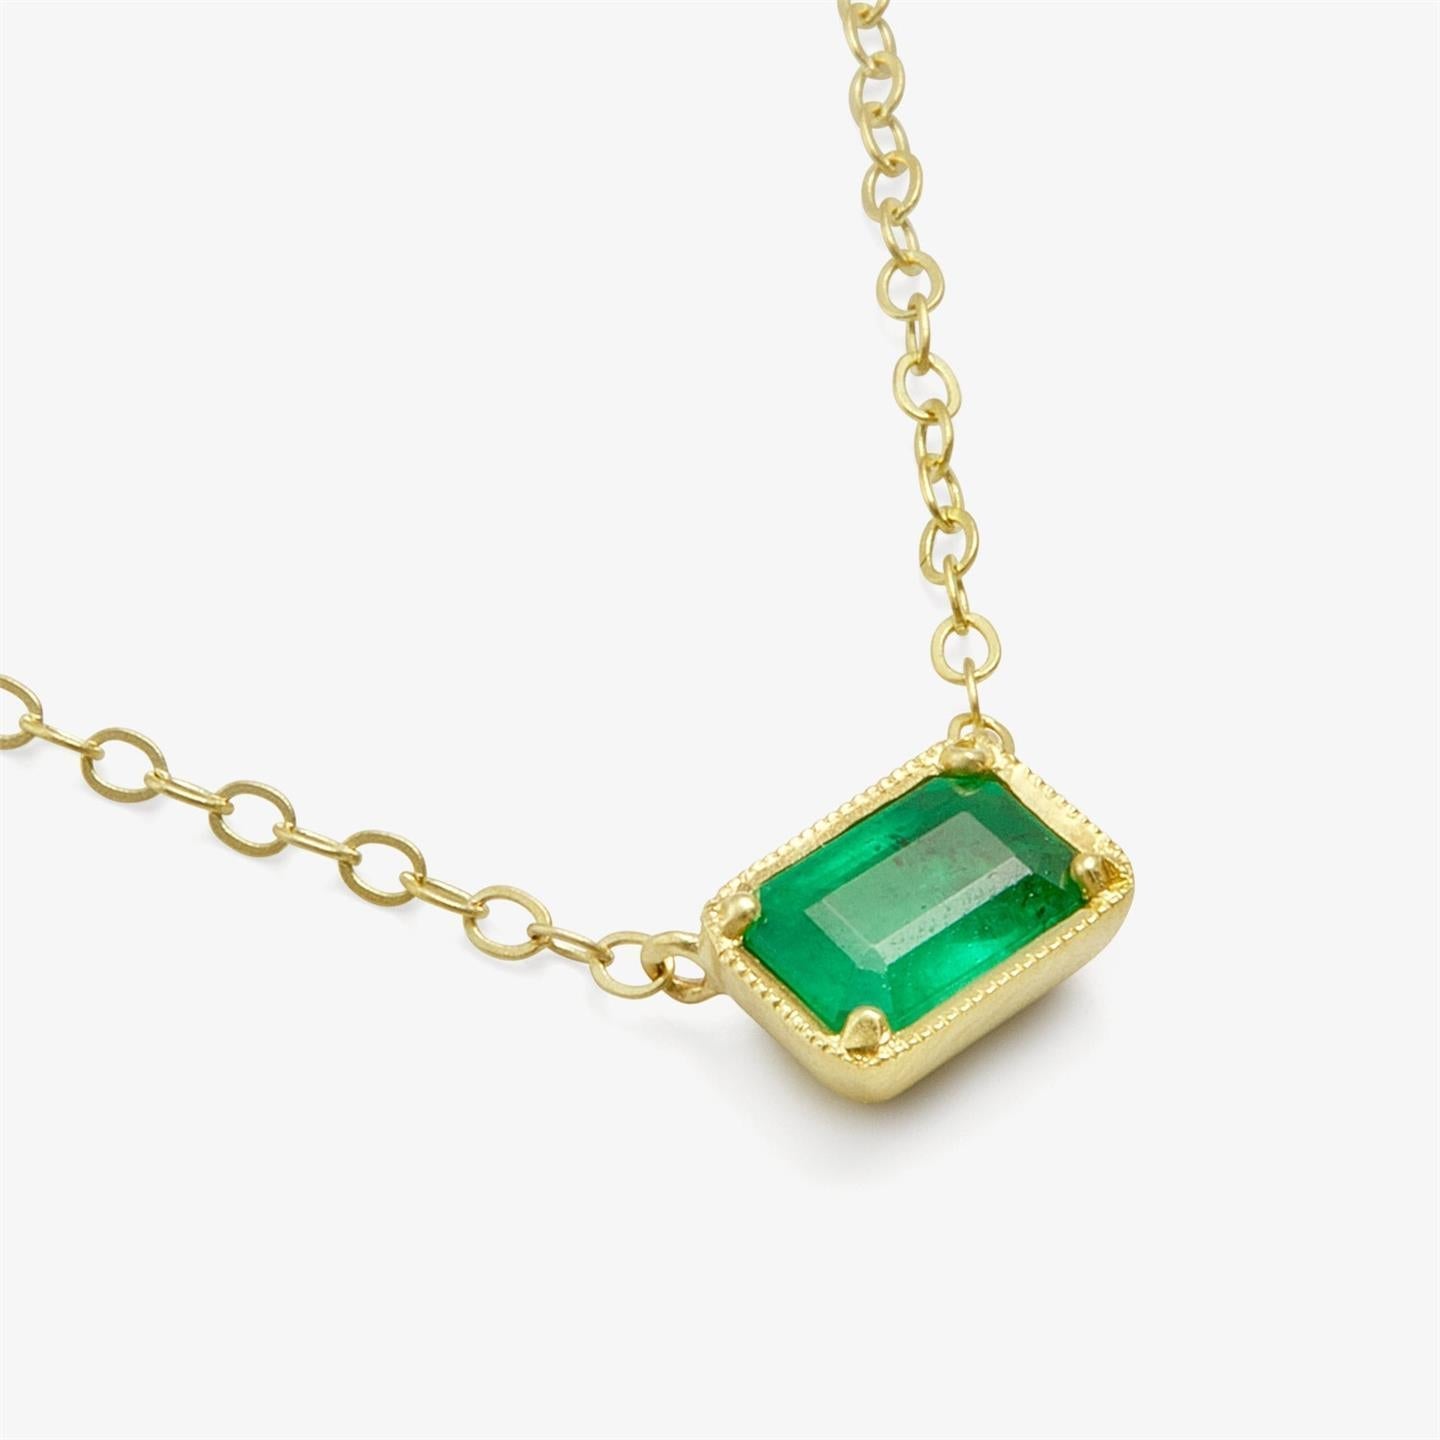 Collana Pendente in oro giallo 14 carati con solitario verde smeraldo da 4 kt - harrychadent.it